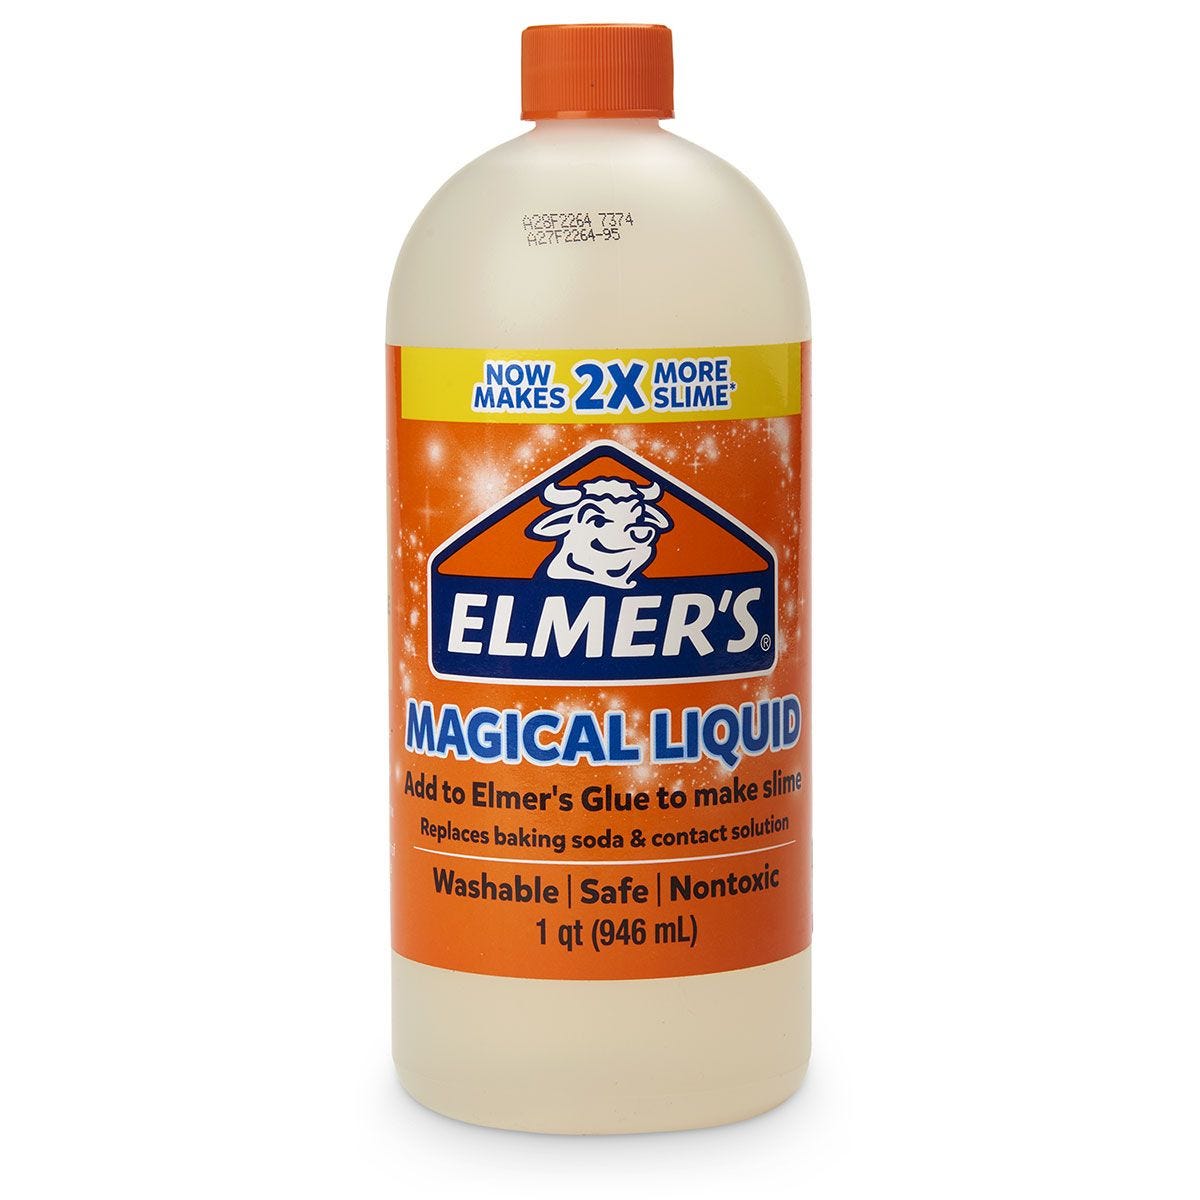 Magic Liquid” that makes Elmer's glue into slime : r/mildlyinteresting